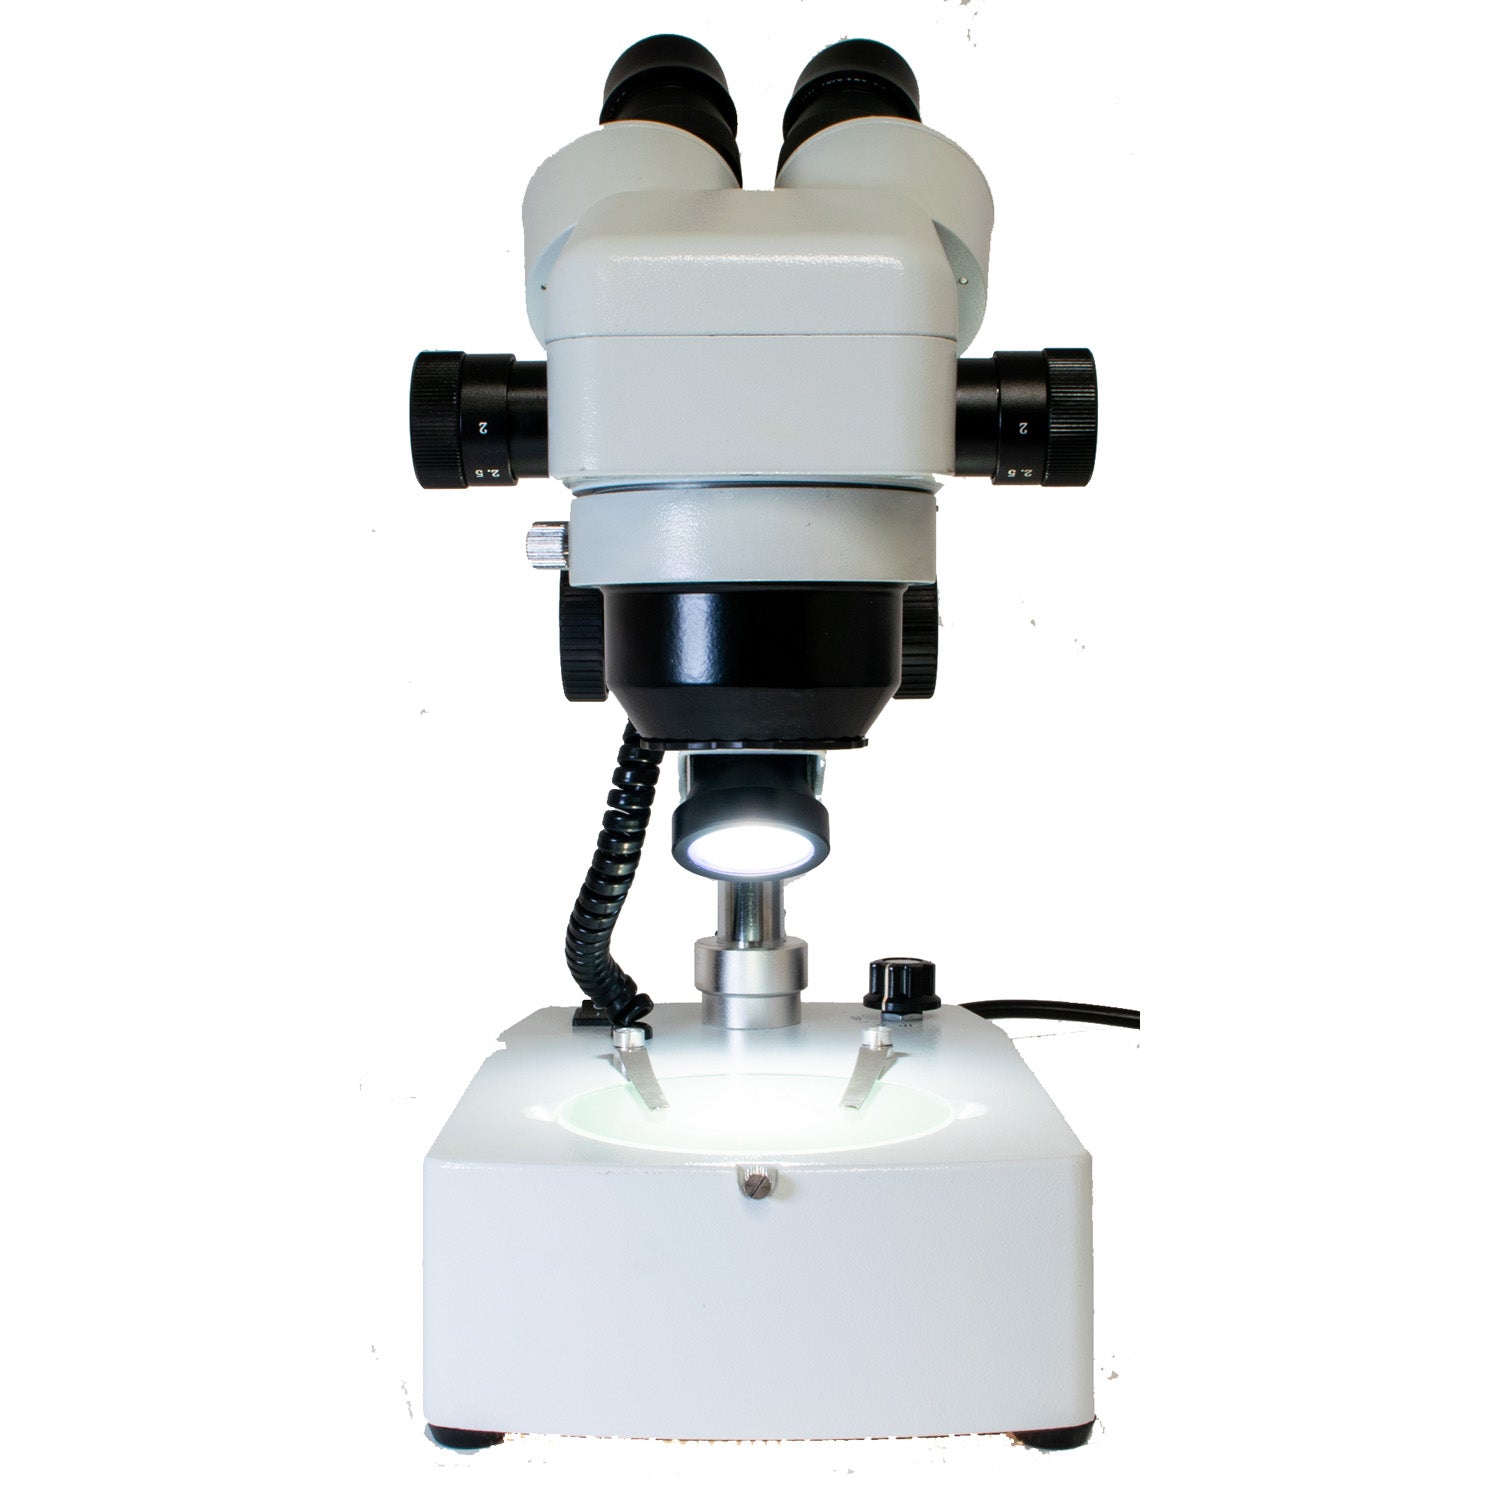 Zoom microscope, 3.75X to 36X